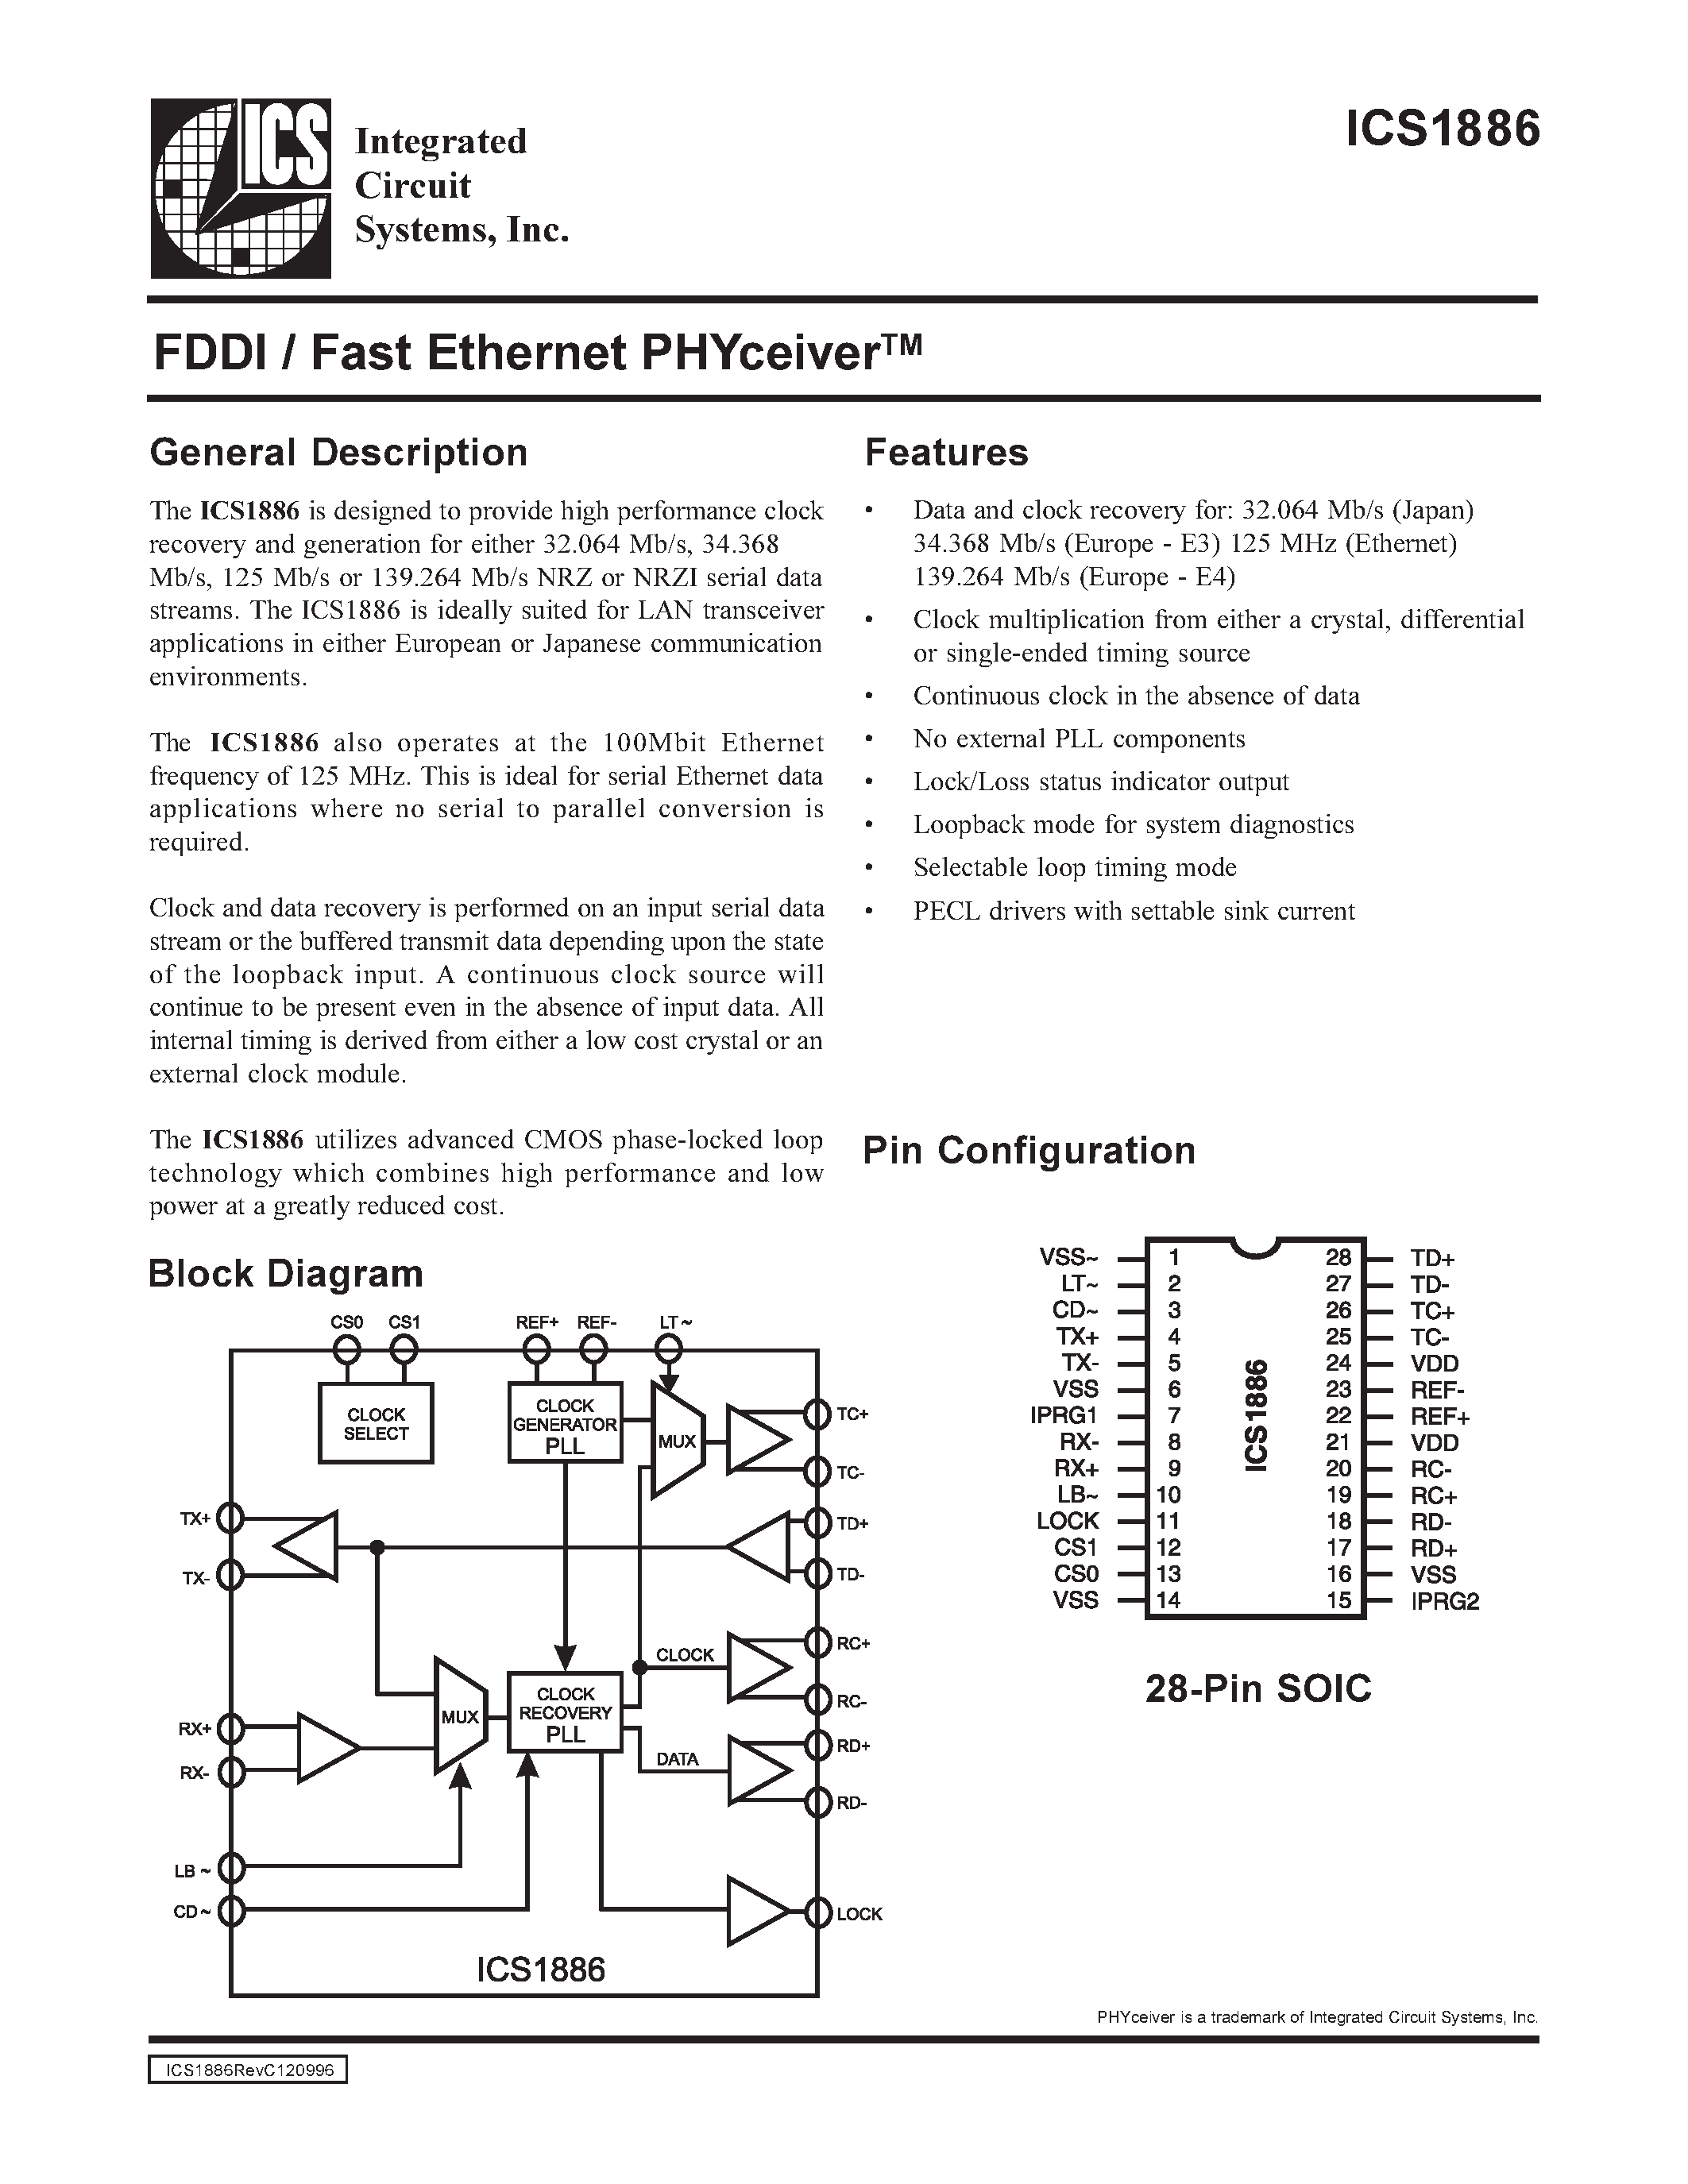 Даташит ICS1886 - FDDI / Fast Ethernet PHYceiverTM страница 1